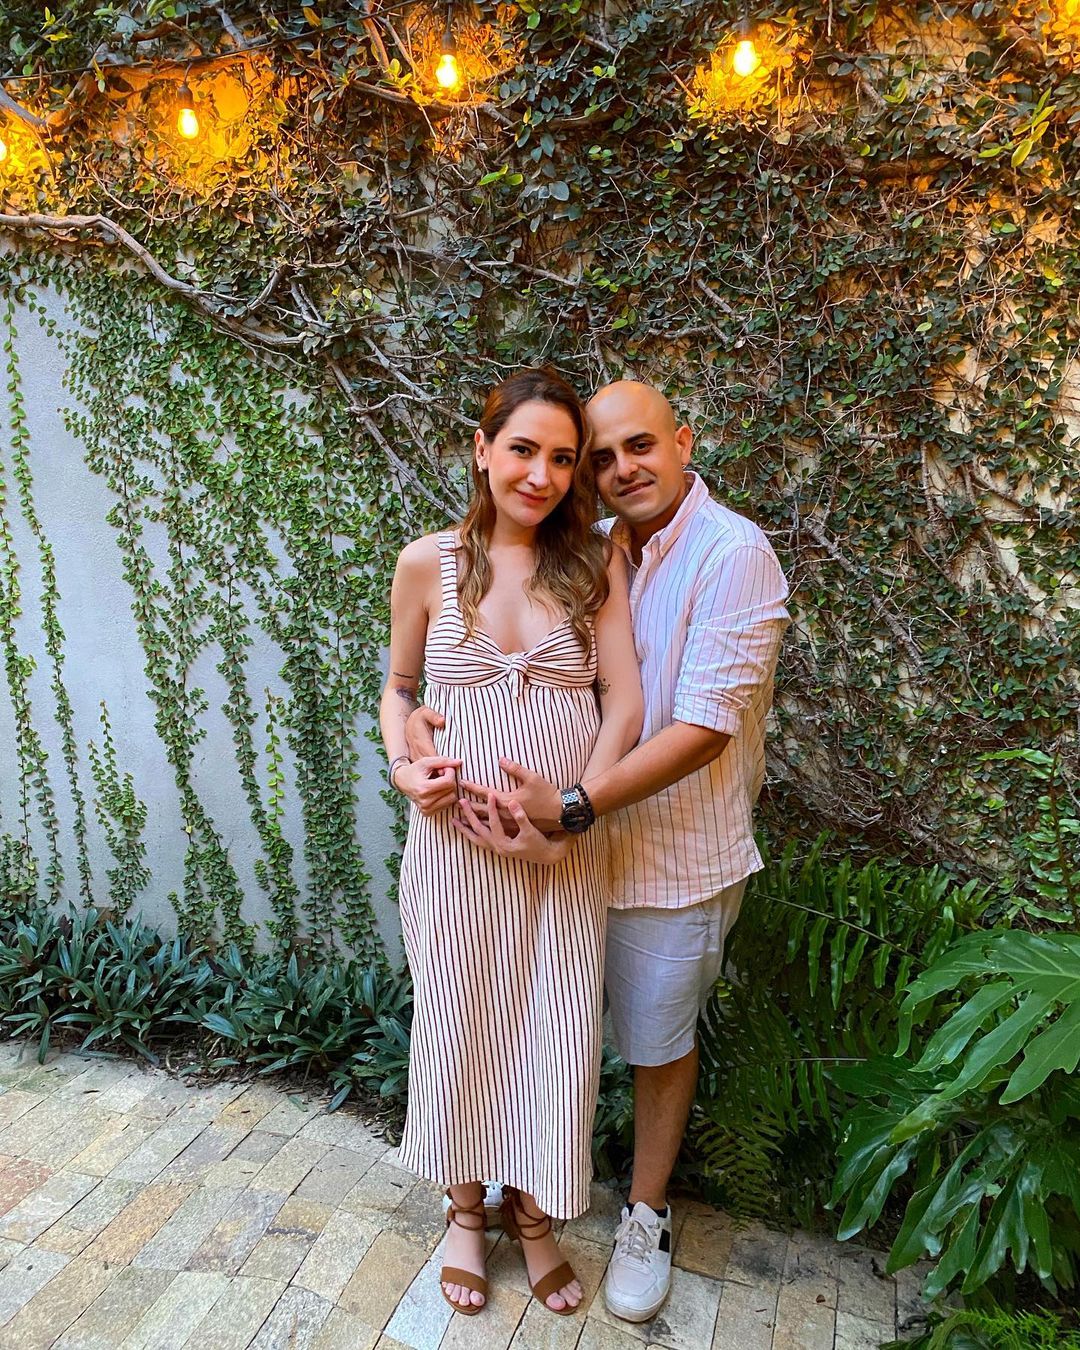 Paola Poulain llegó hasta el séptimo mes de embarazo; sin embargo, la tragedia los sobrepasó (Foto: Instagram/@paola.poulain)